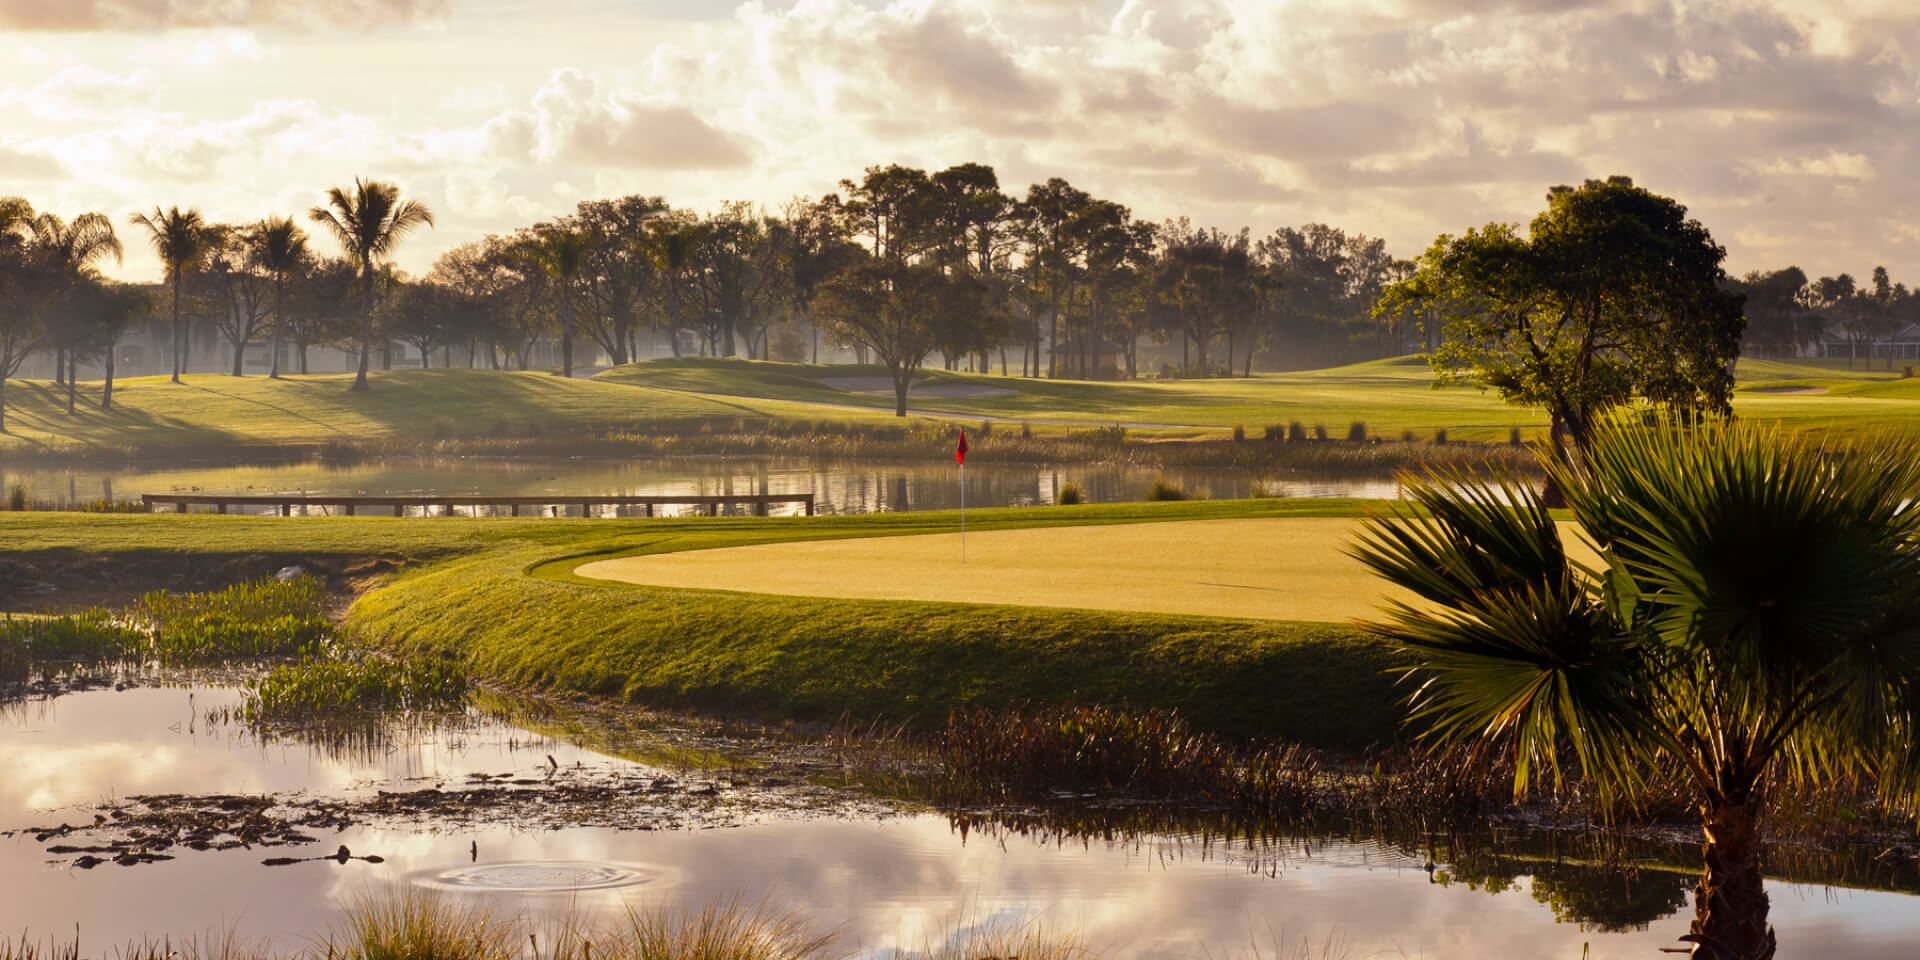 Golf & Spa Resort in Palm Beach Gardens FL